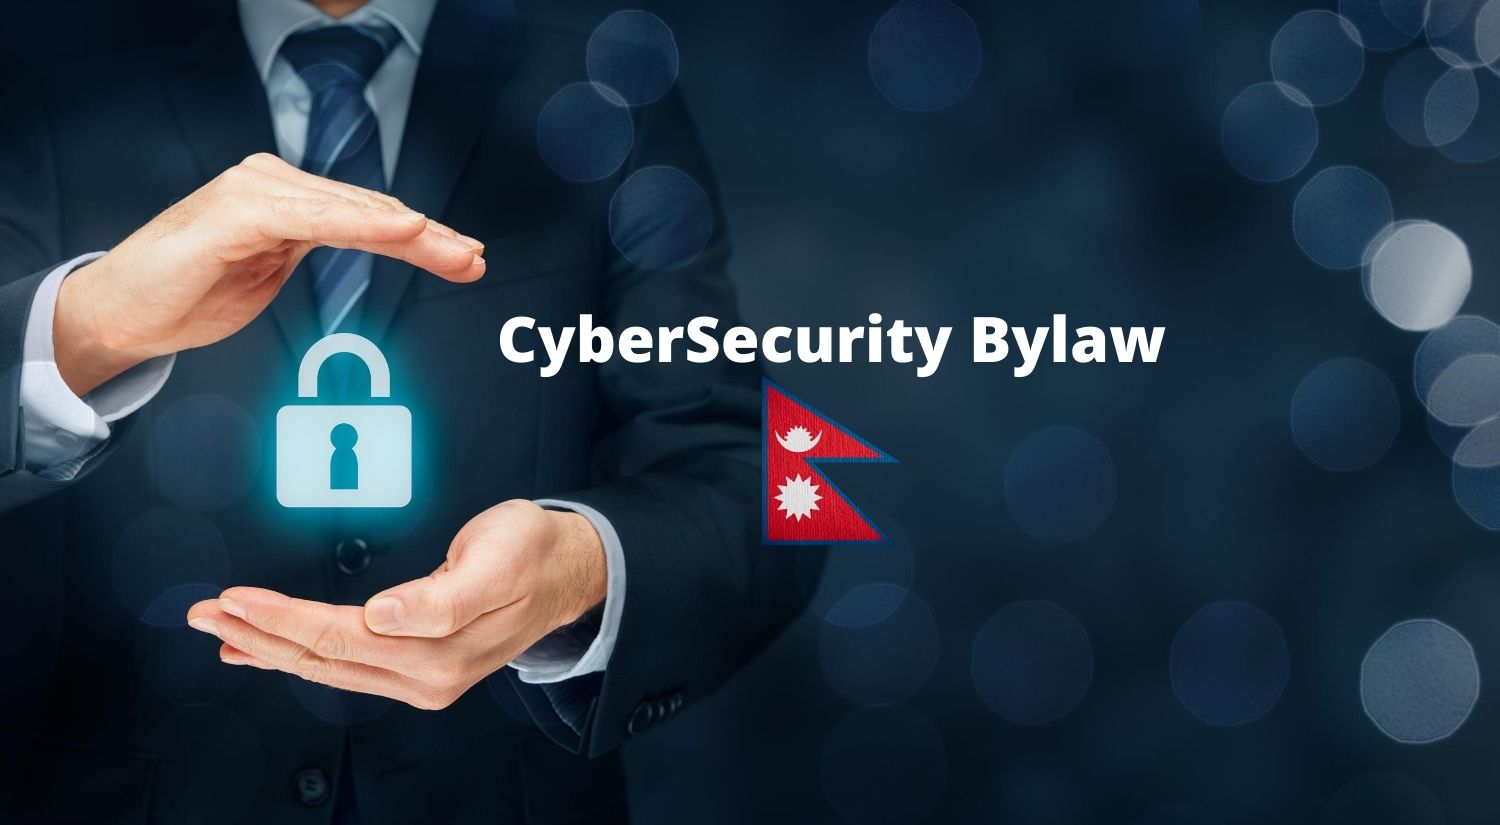 Cyber Security bylaw 2077 Nepal